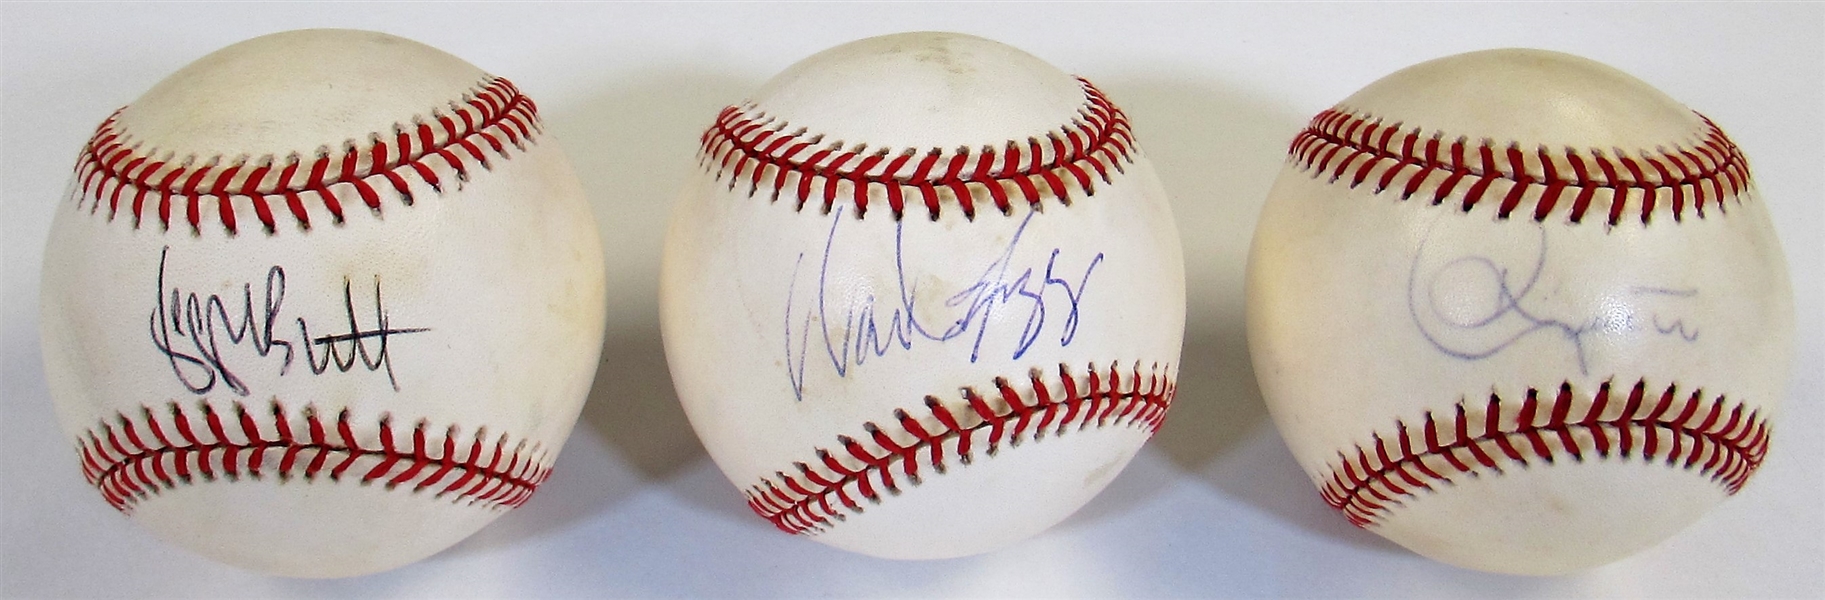 George Brett - Paul Molitor - Wade Boggs Signed Baseballs